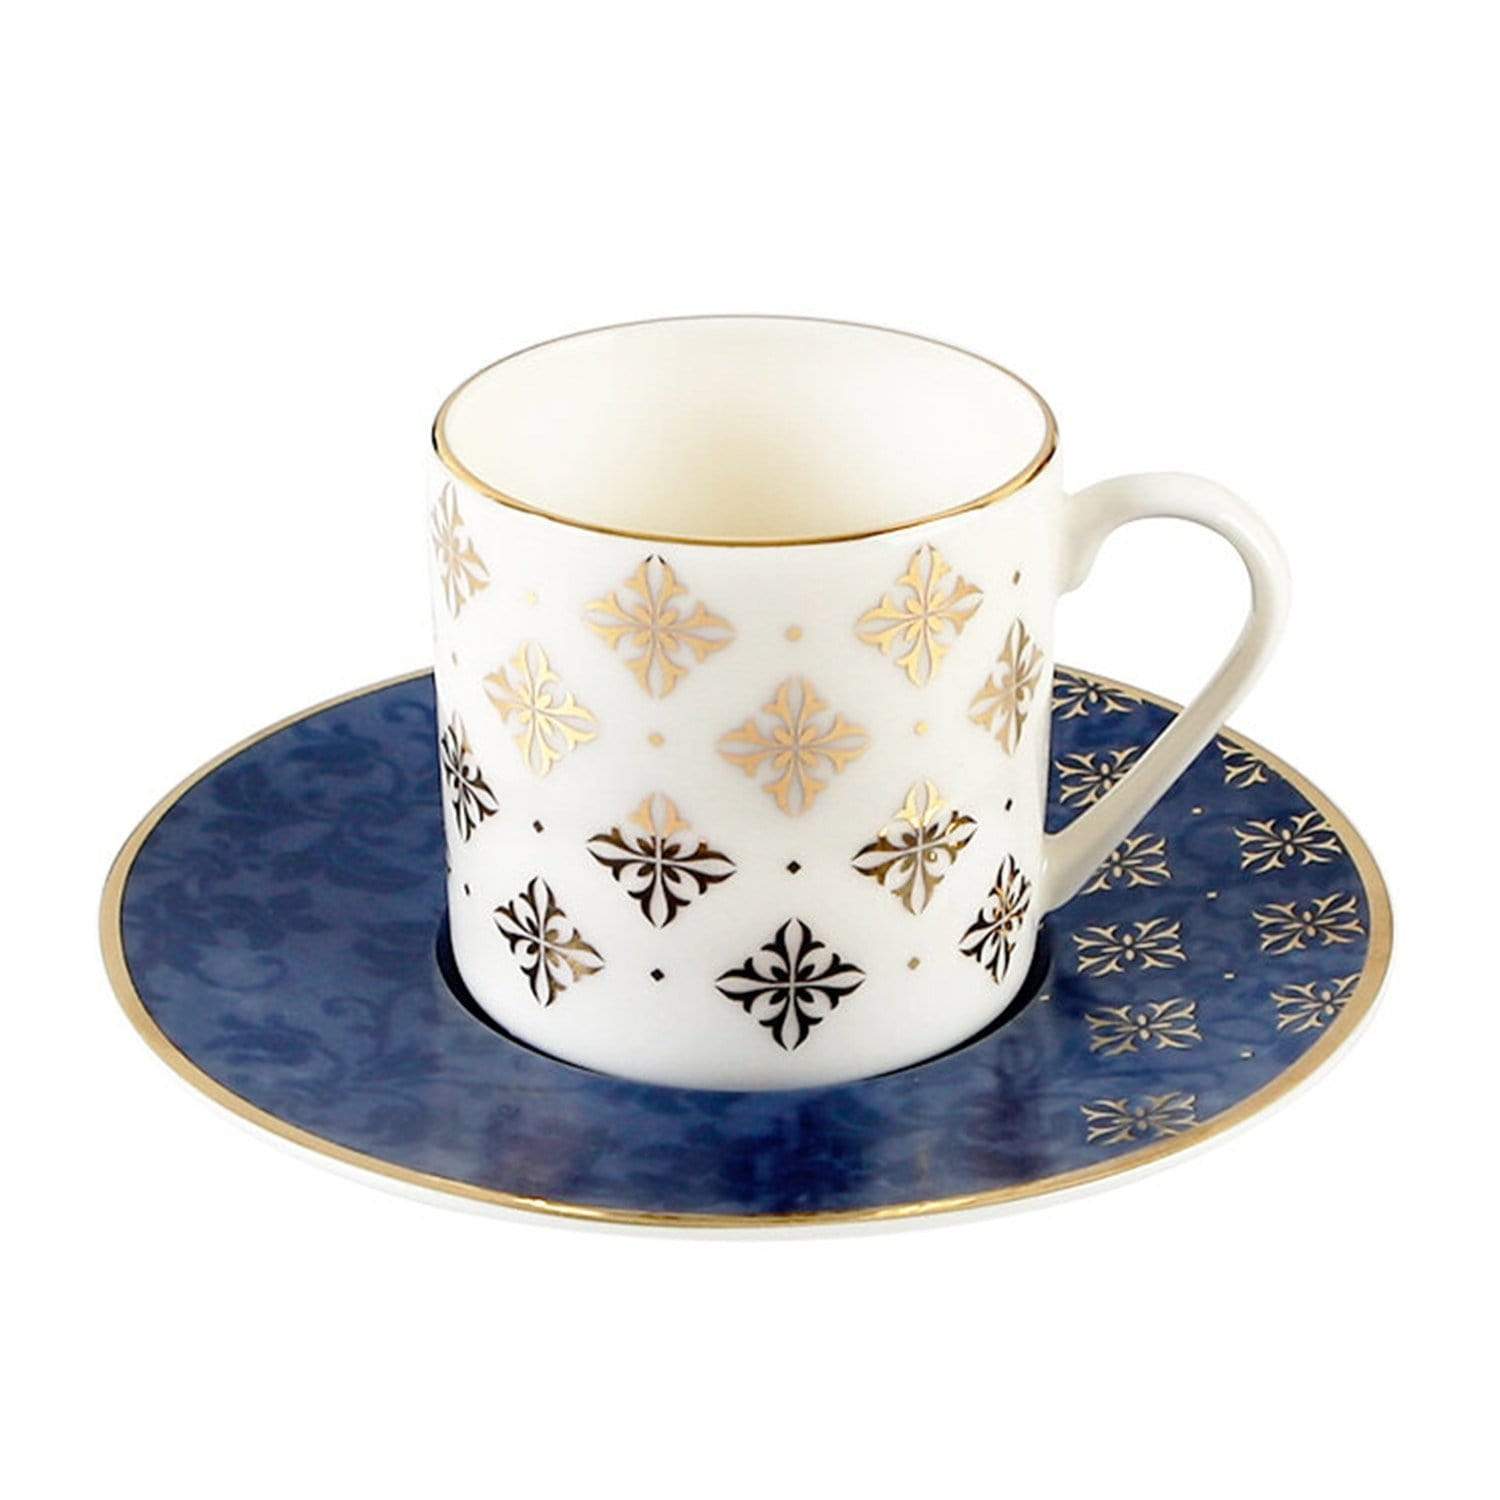 Porland Porselen Evoke Design 2 فنجان قهوة و صحن - أبيض و أزرق - 04ALM002750 - Jashanmal Home